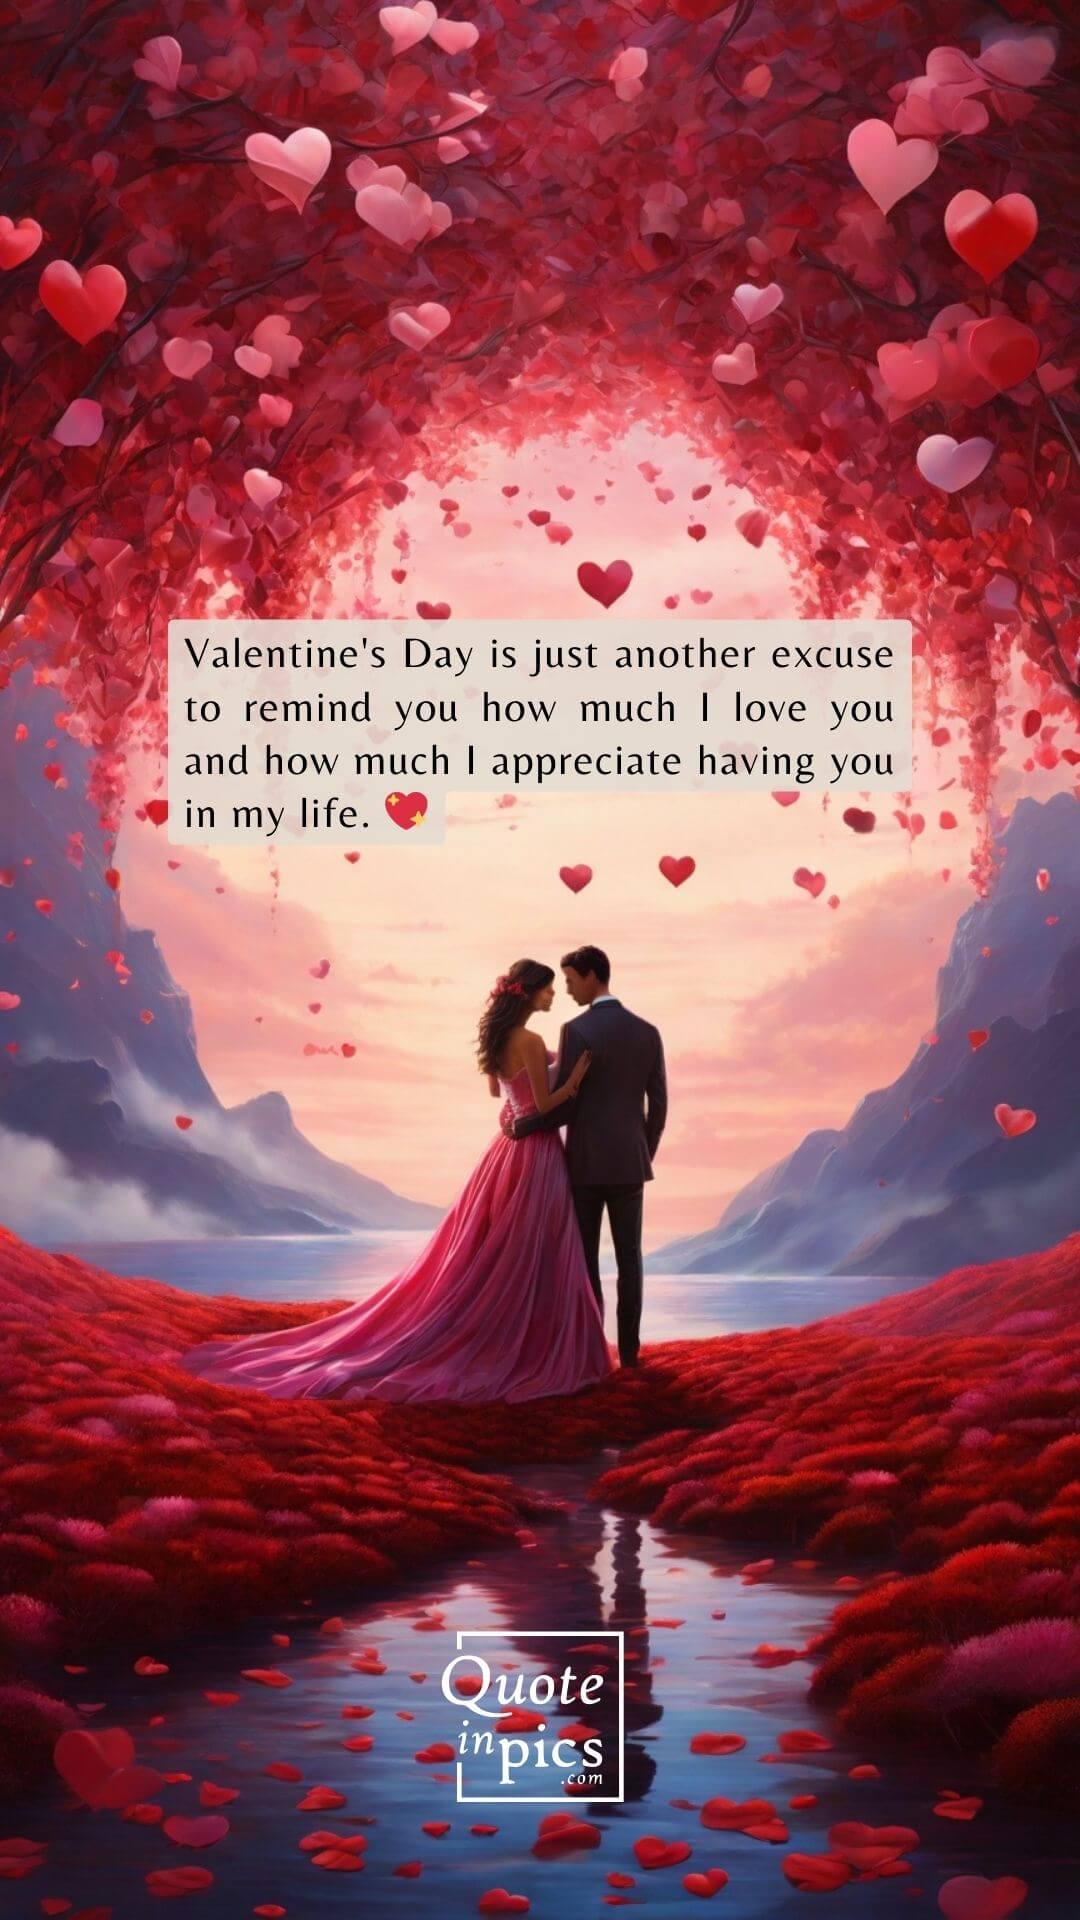 Valentine's Day Love Quotes: Romantic Expressions to Celebrate True Love